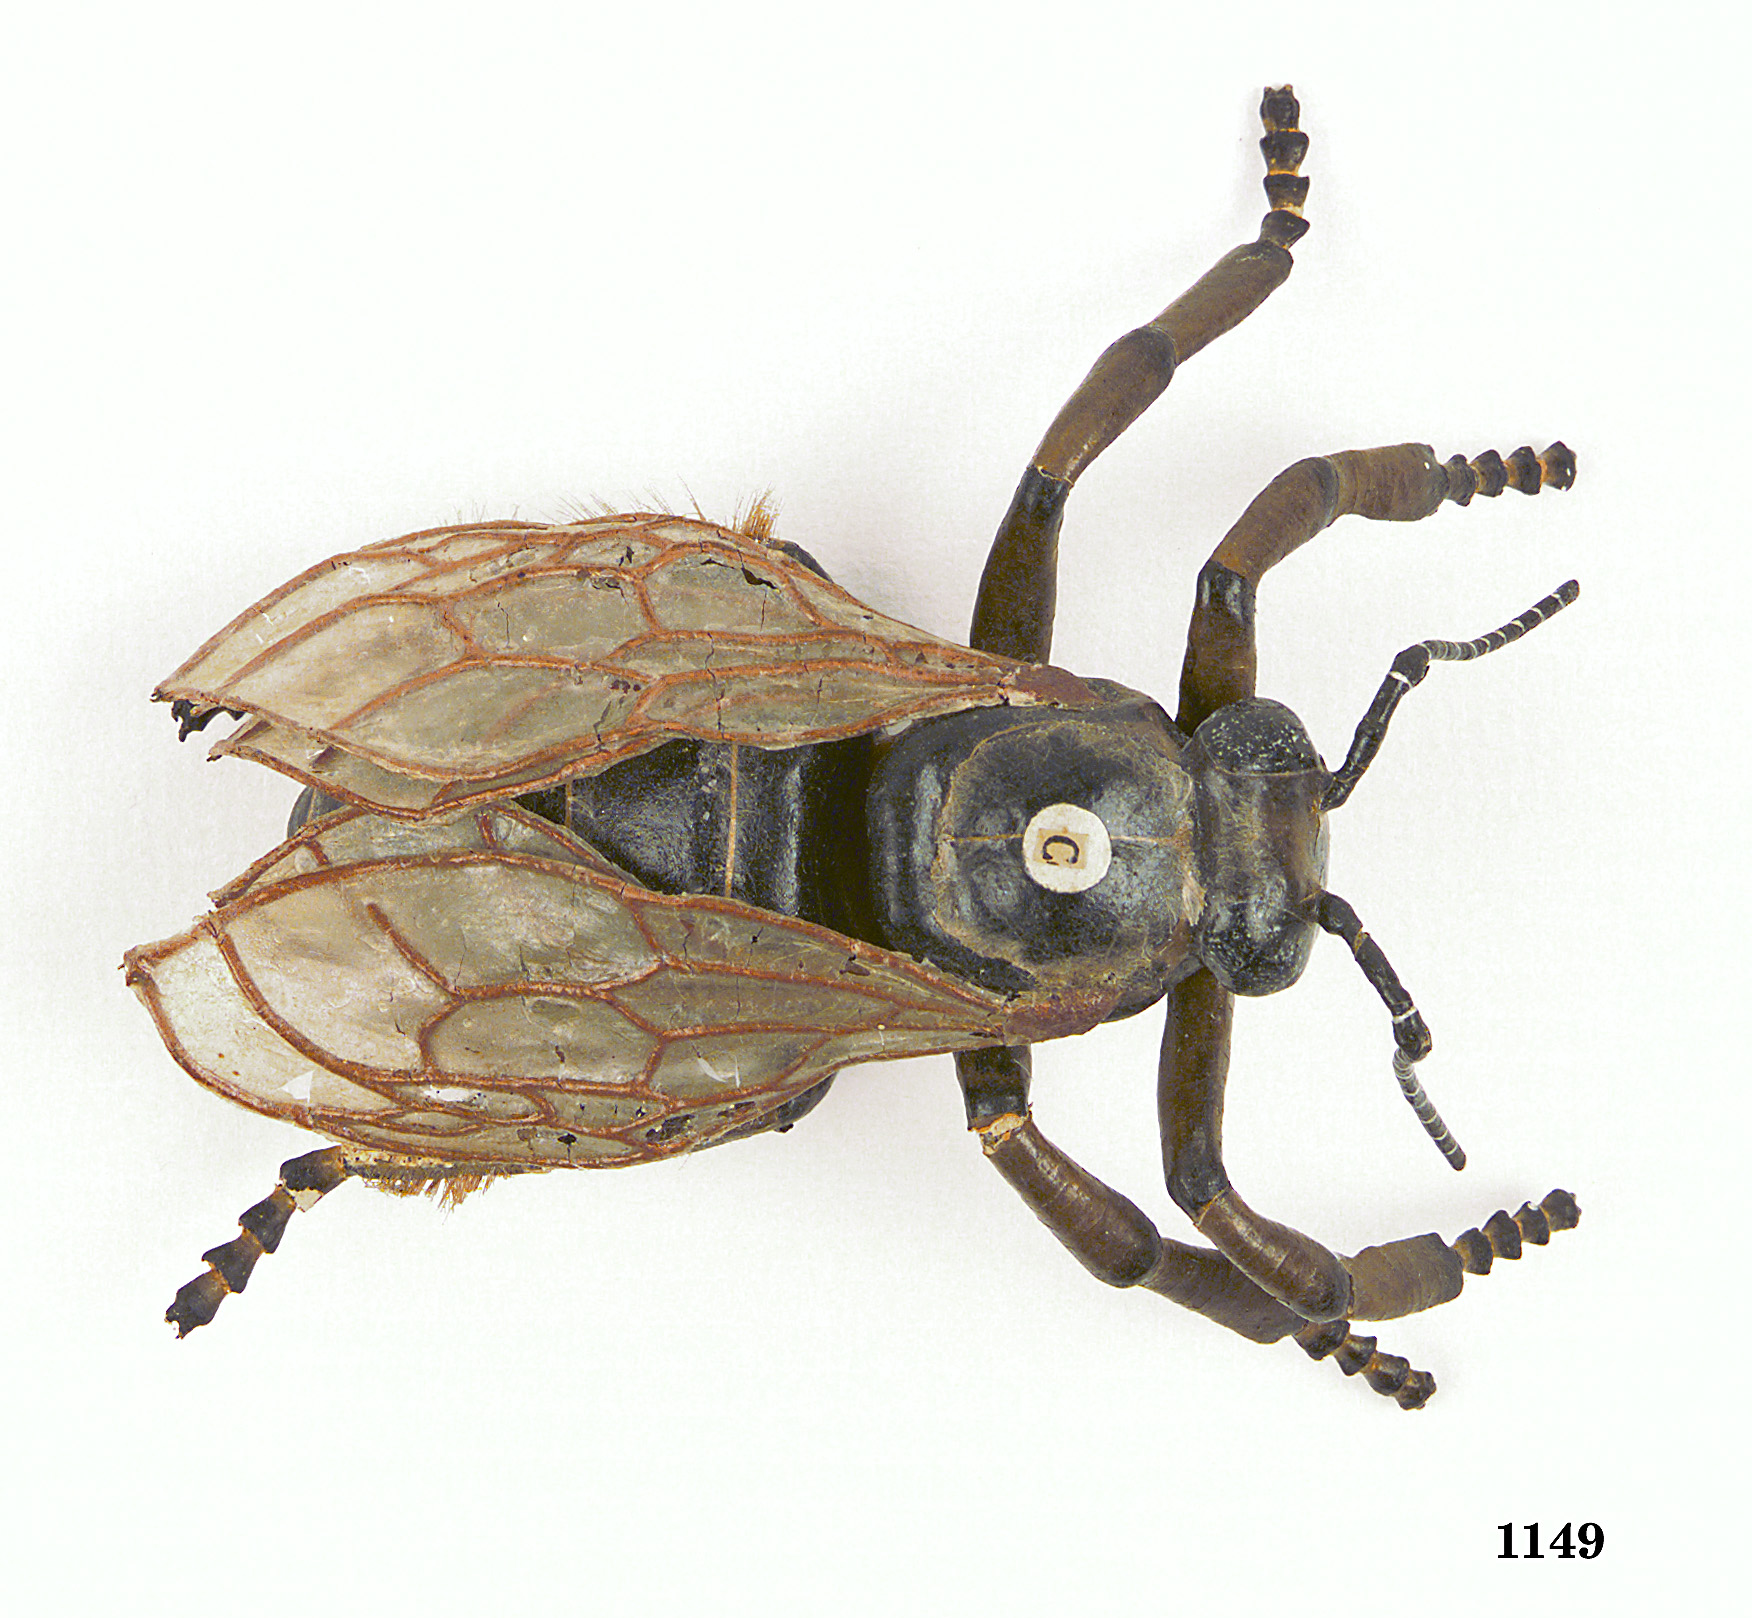 Model of a worker bee